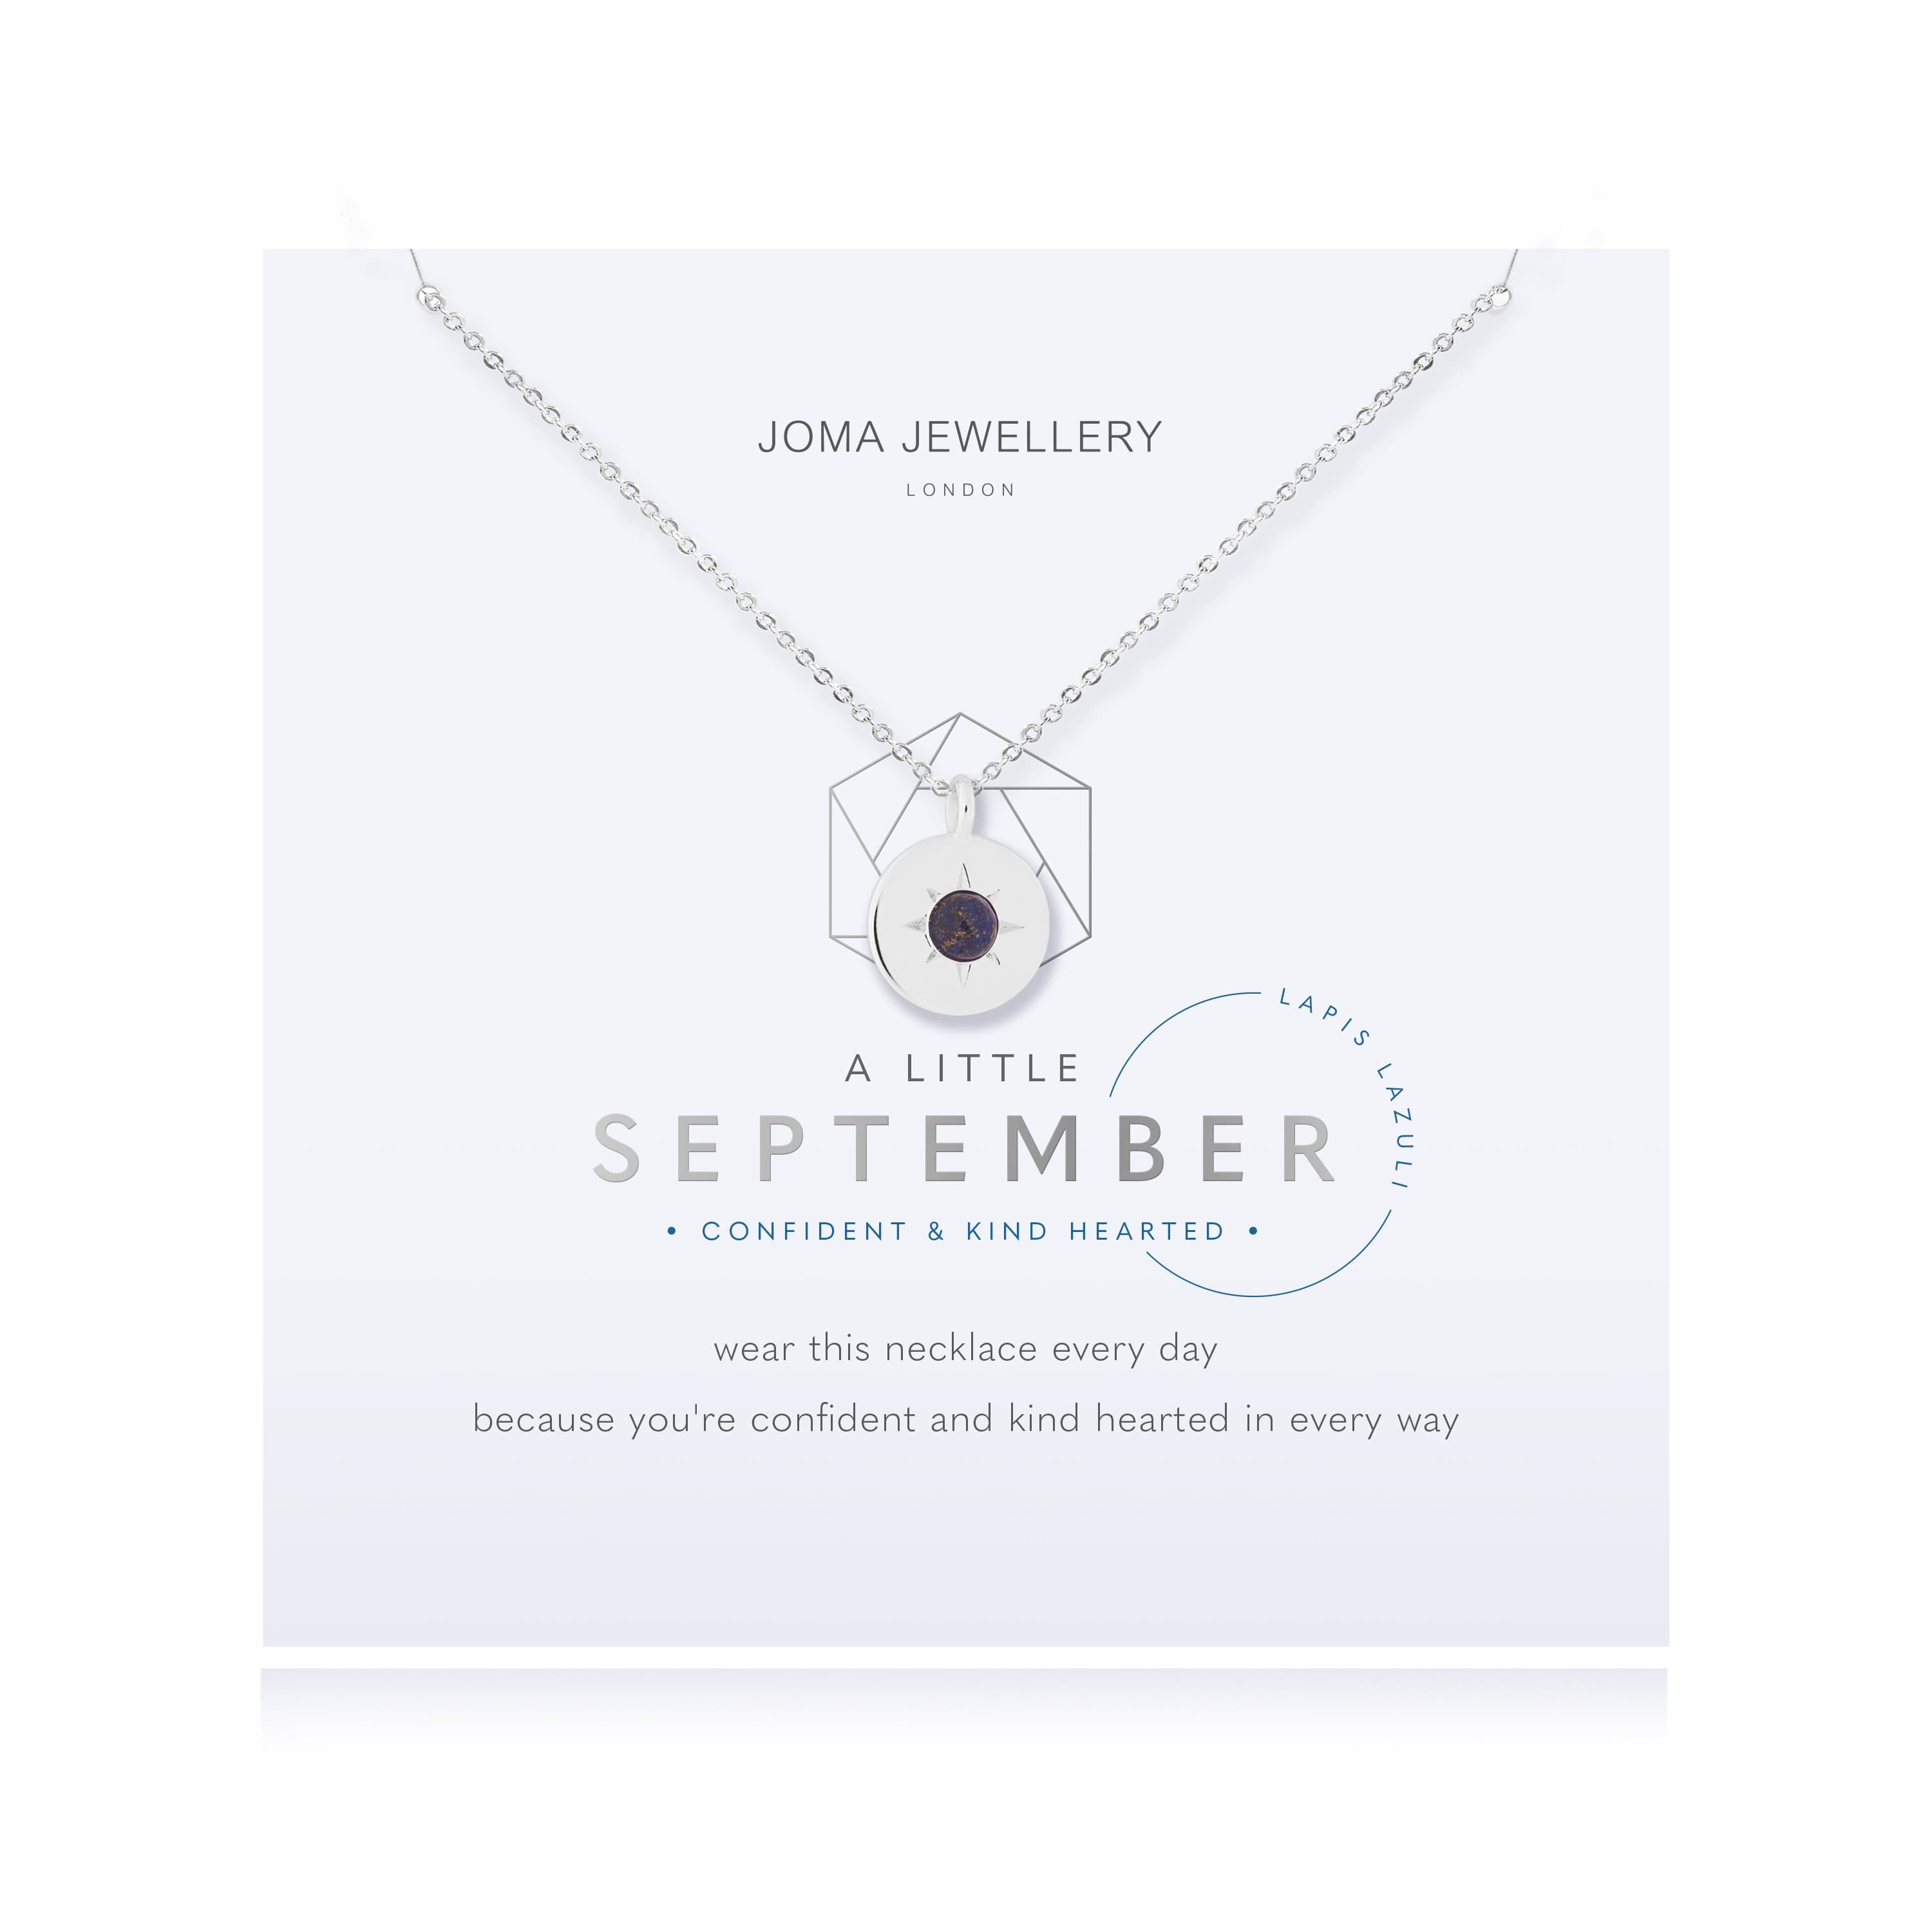 Joma Jewellery Necklace Joma Jewellery Necklace - Birthstone - September - Lapis Lazuli